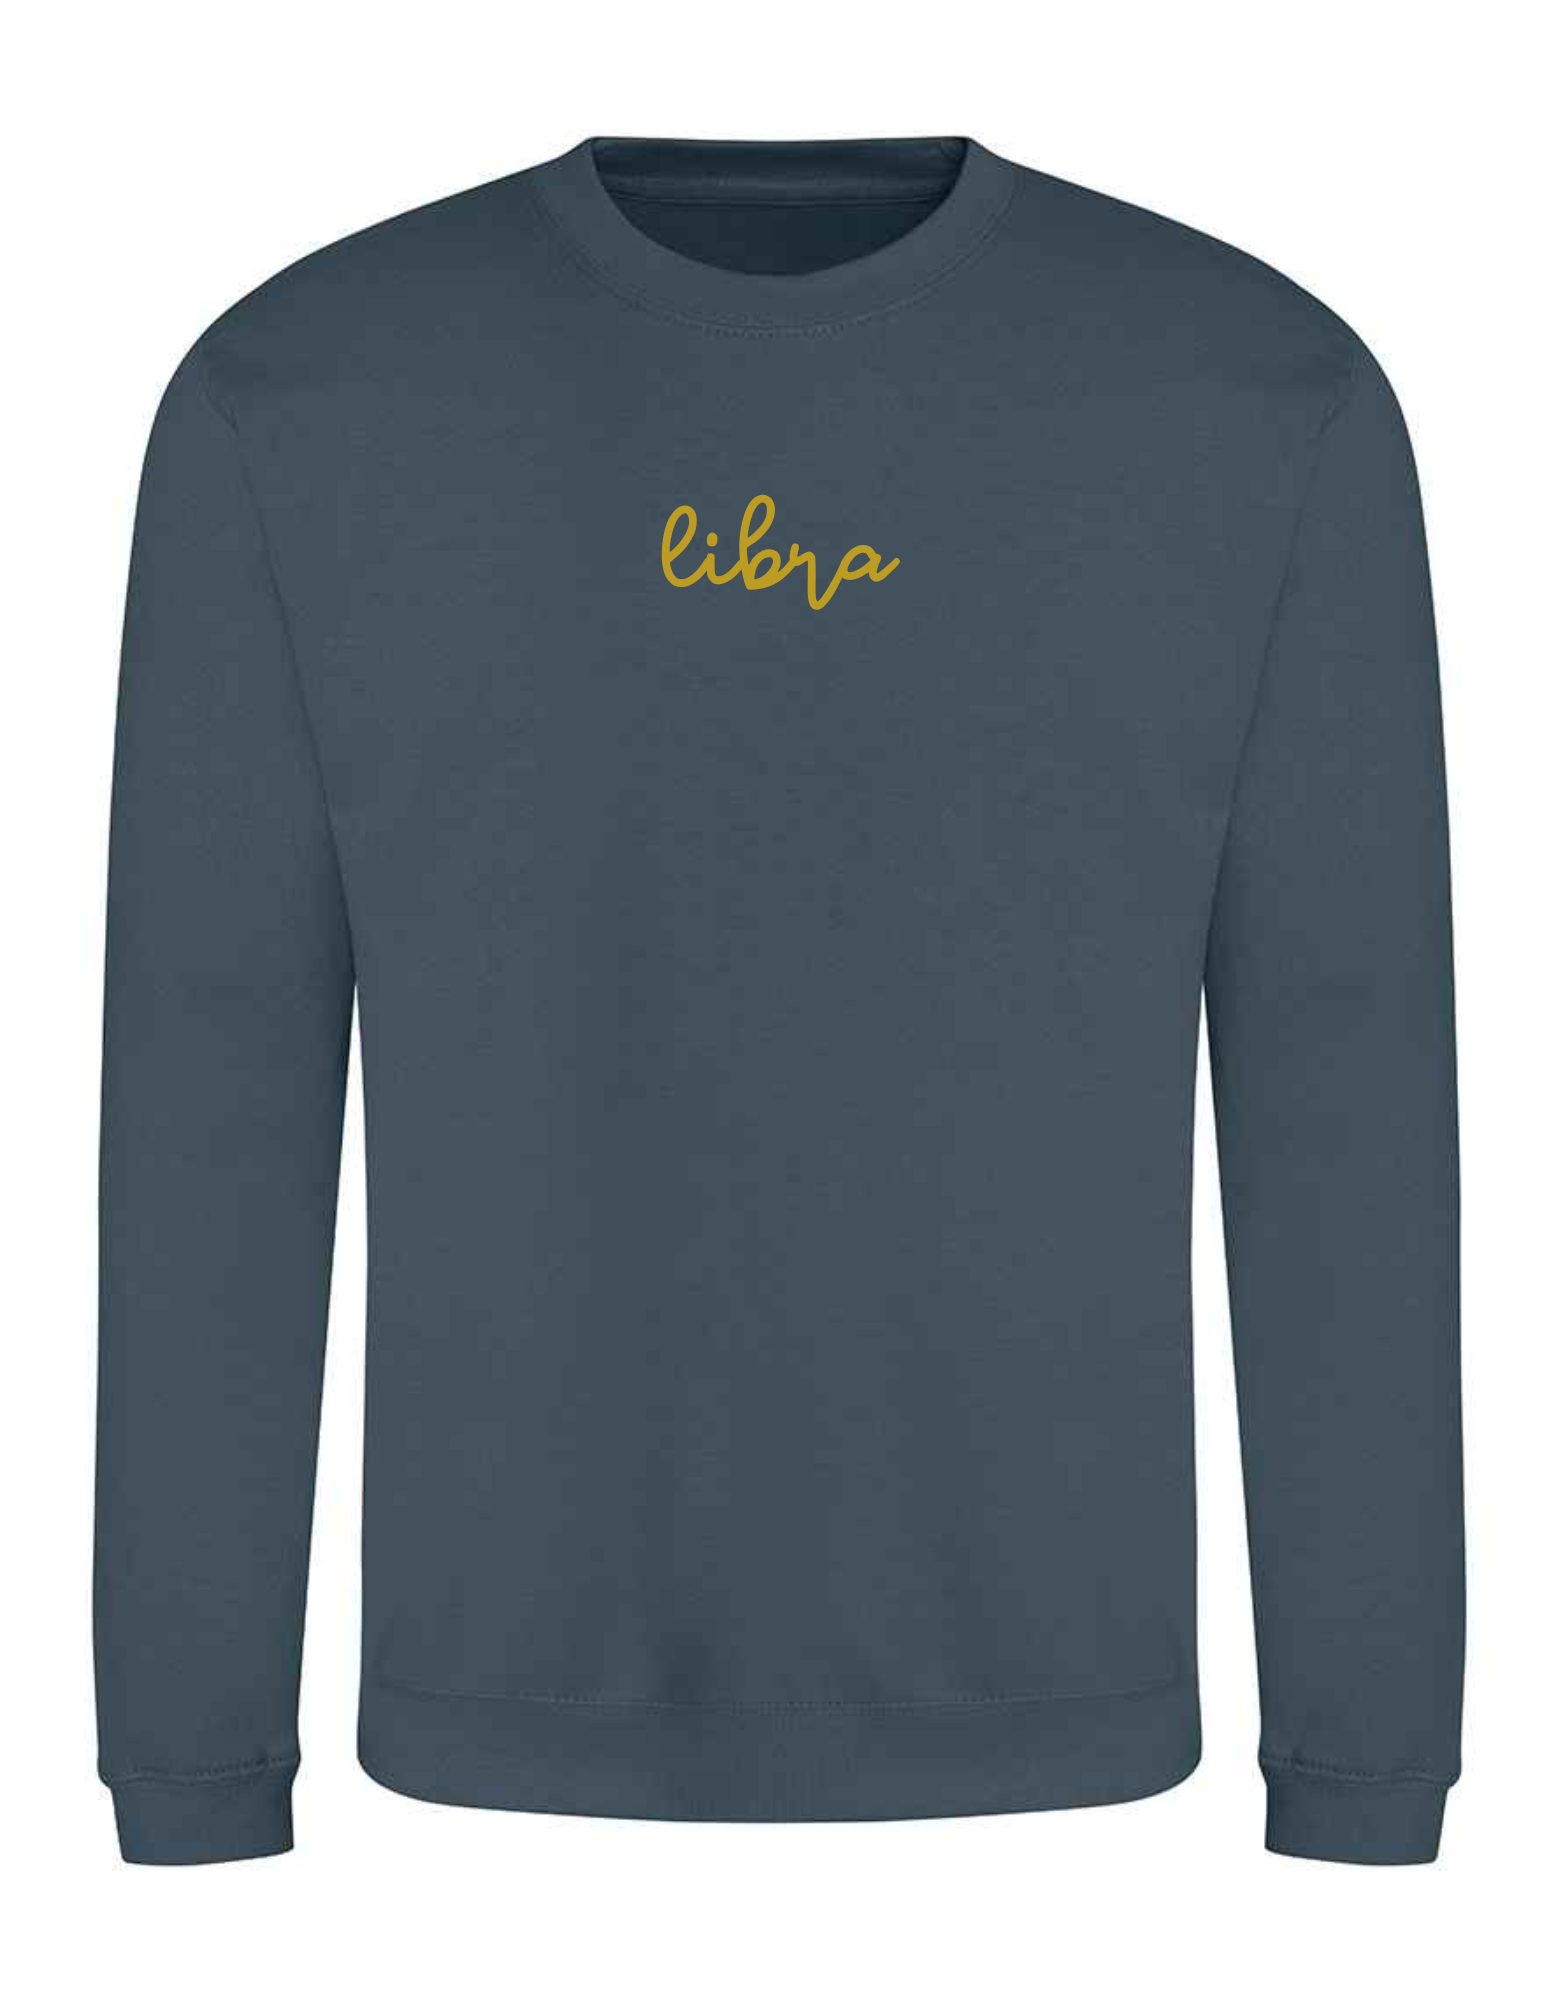 Crew neck sweater with zodiac Libra design